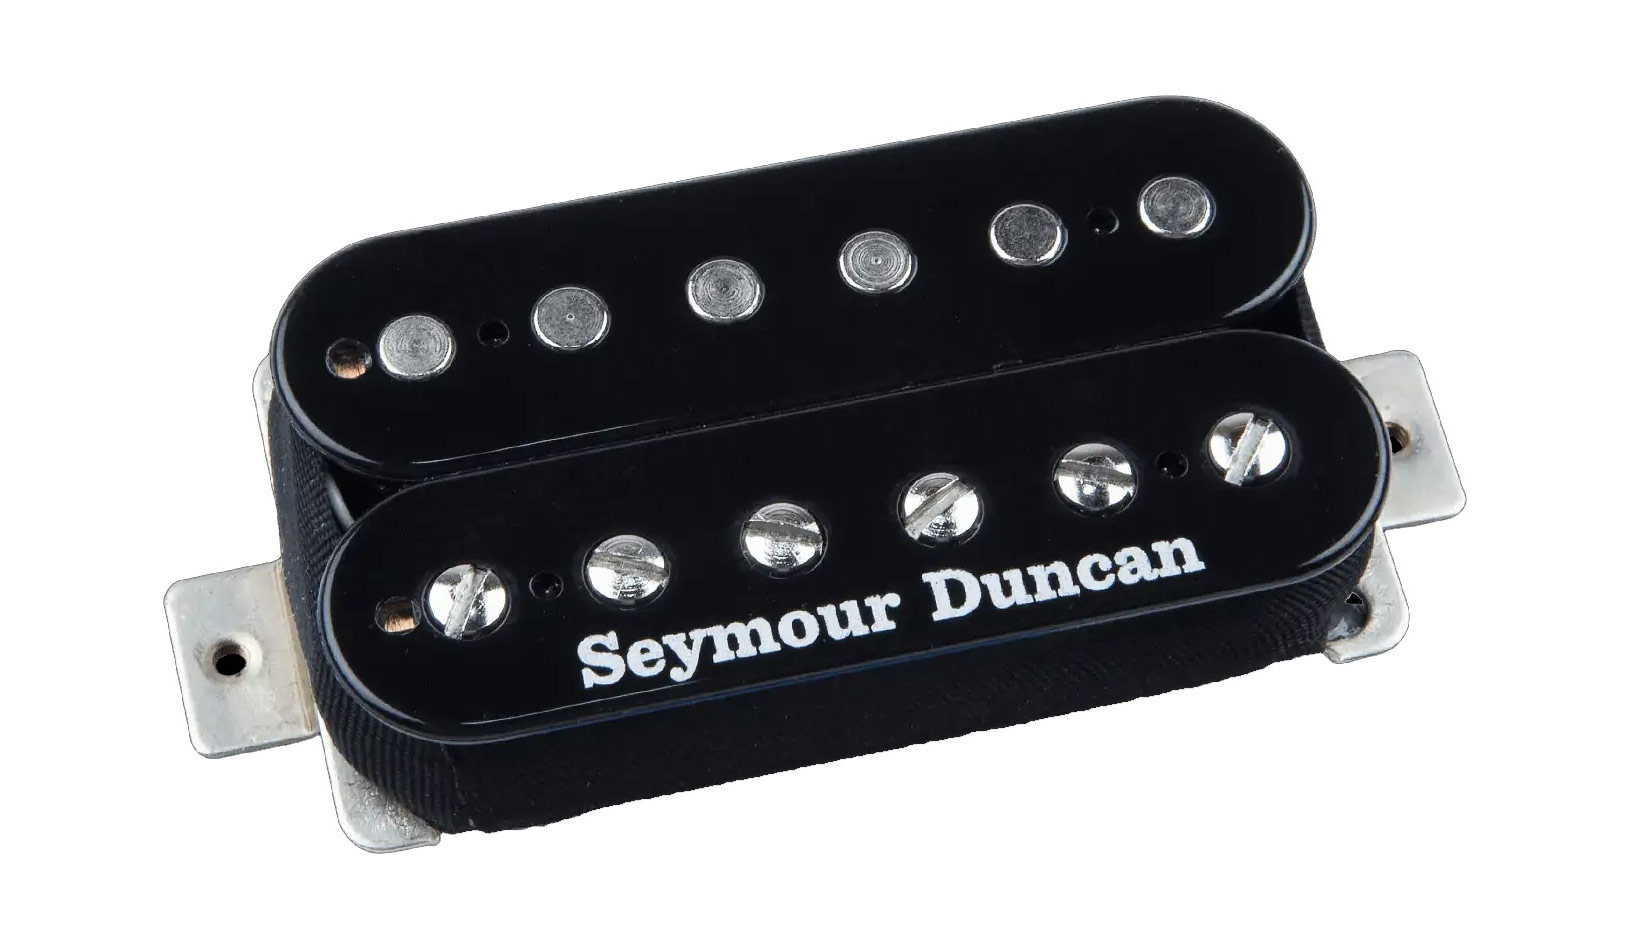 Seymour Duncan TB-14 Custom 5 Trembucker Bridge Black | guitarguitar